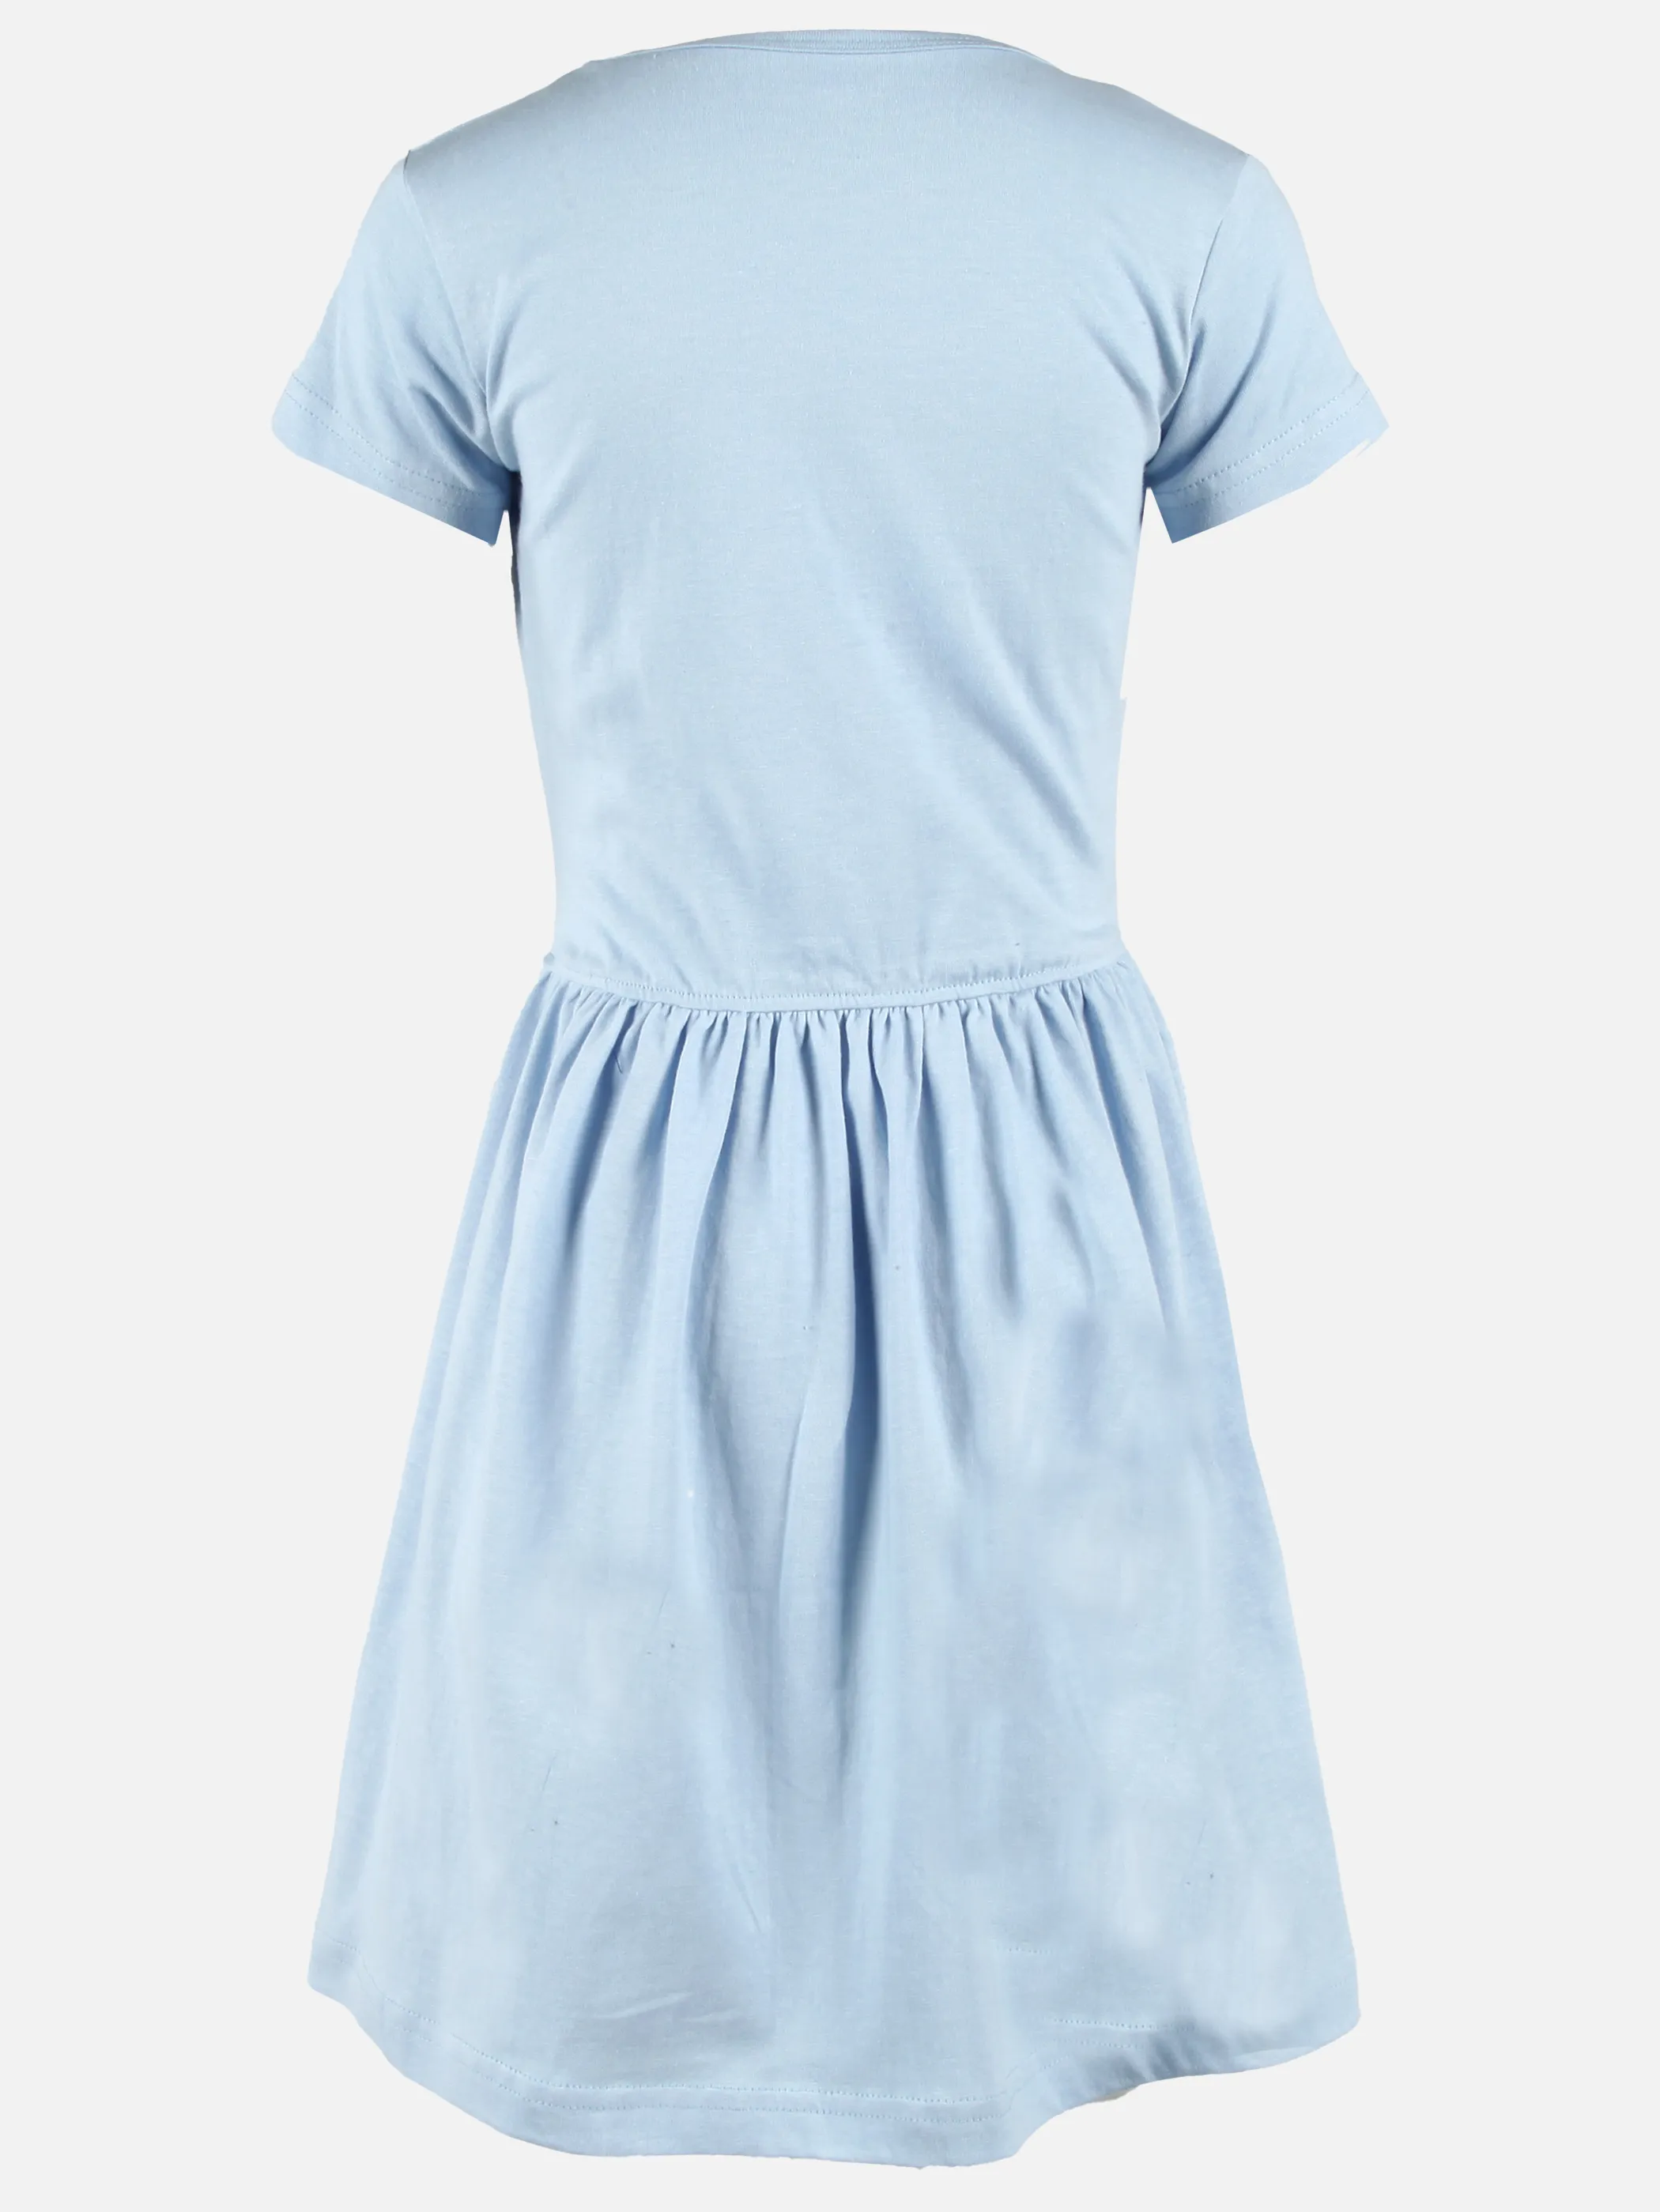 Frozen KM Kleid mit Frozen Frontdruck in hellblau Blau 892450 HELLBLAU 2